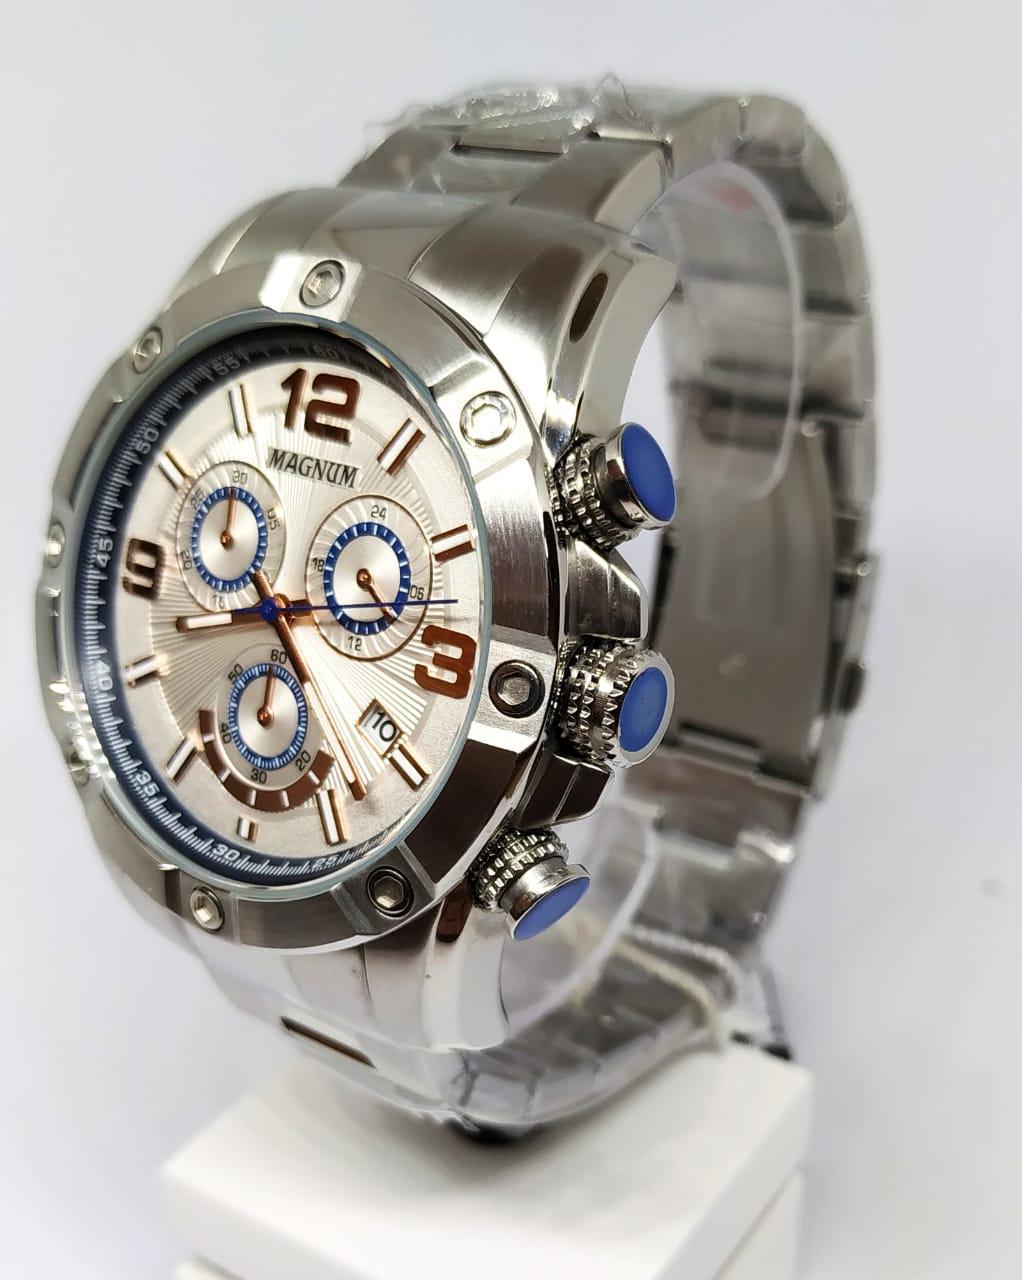 Relógios Web Shop - Loja Oficial Loja Credenciada Relógio Magnum